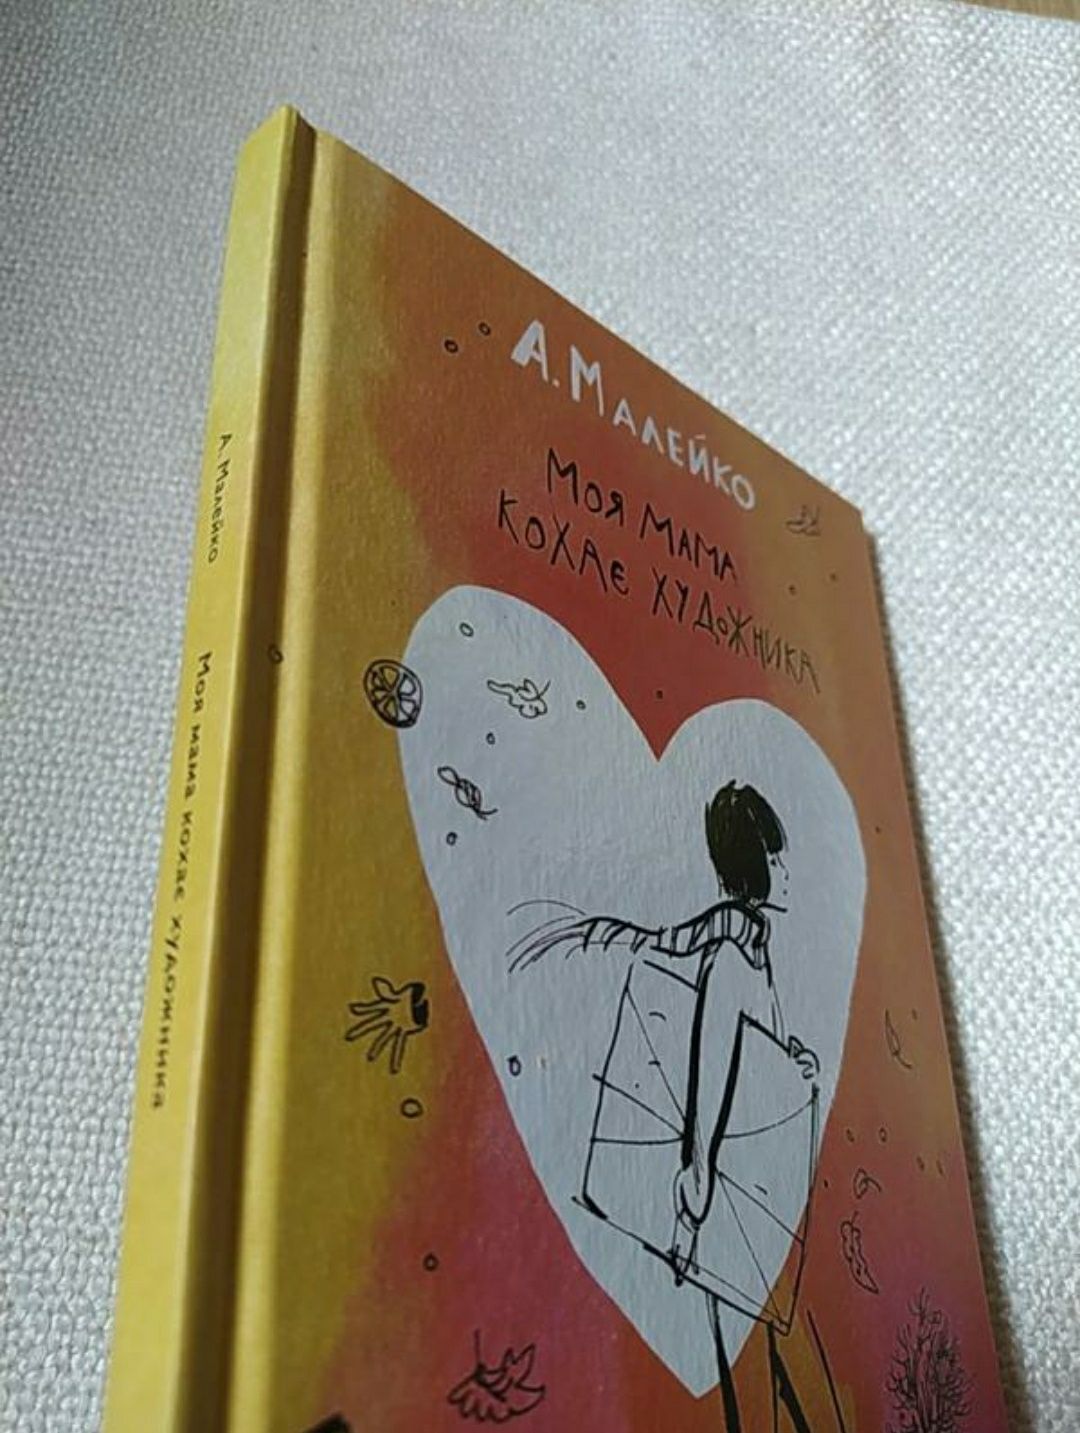 Книга "моя мама кохає художника" Анастасія Маленко